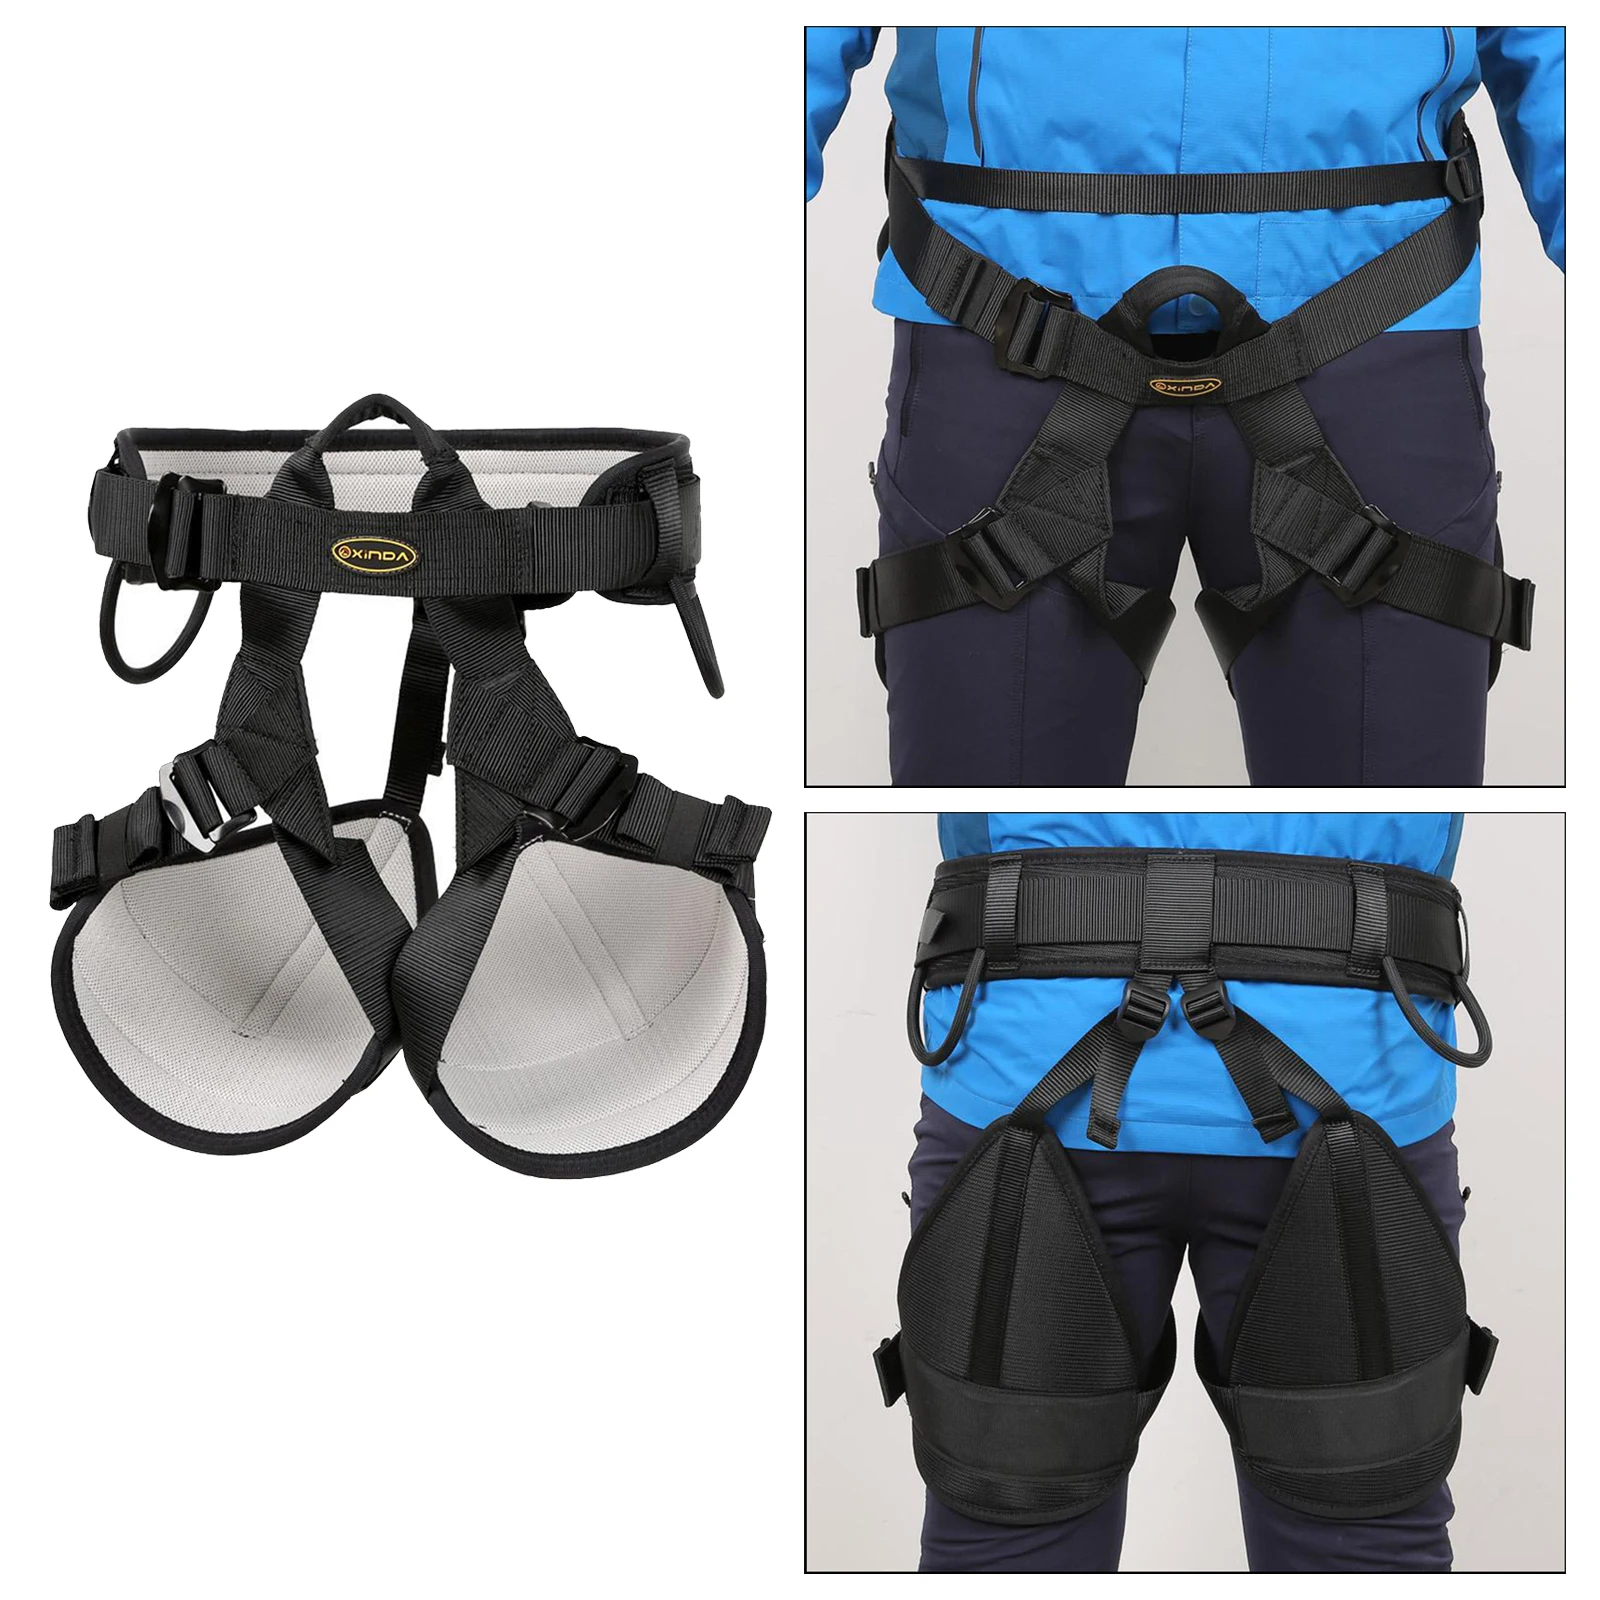 Professional Outdoor Sports Safety Belt Rock Mountain Climbing Harness Waist Support Half Body Seat Belt Aerial Survival